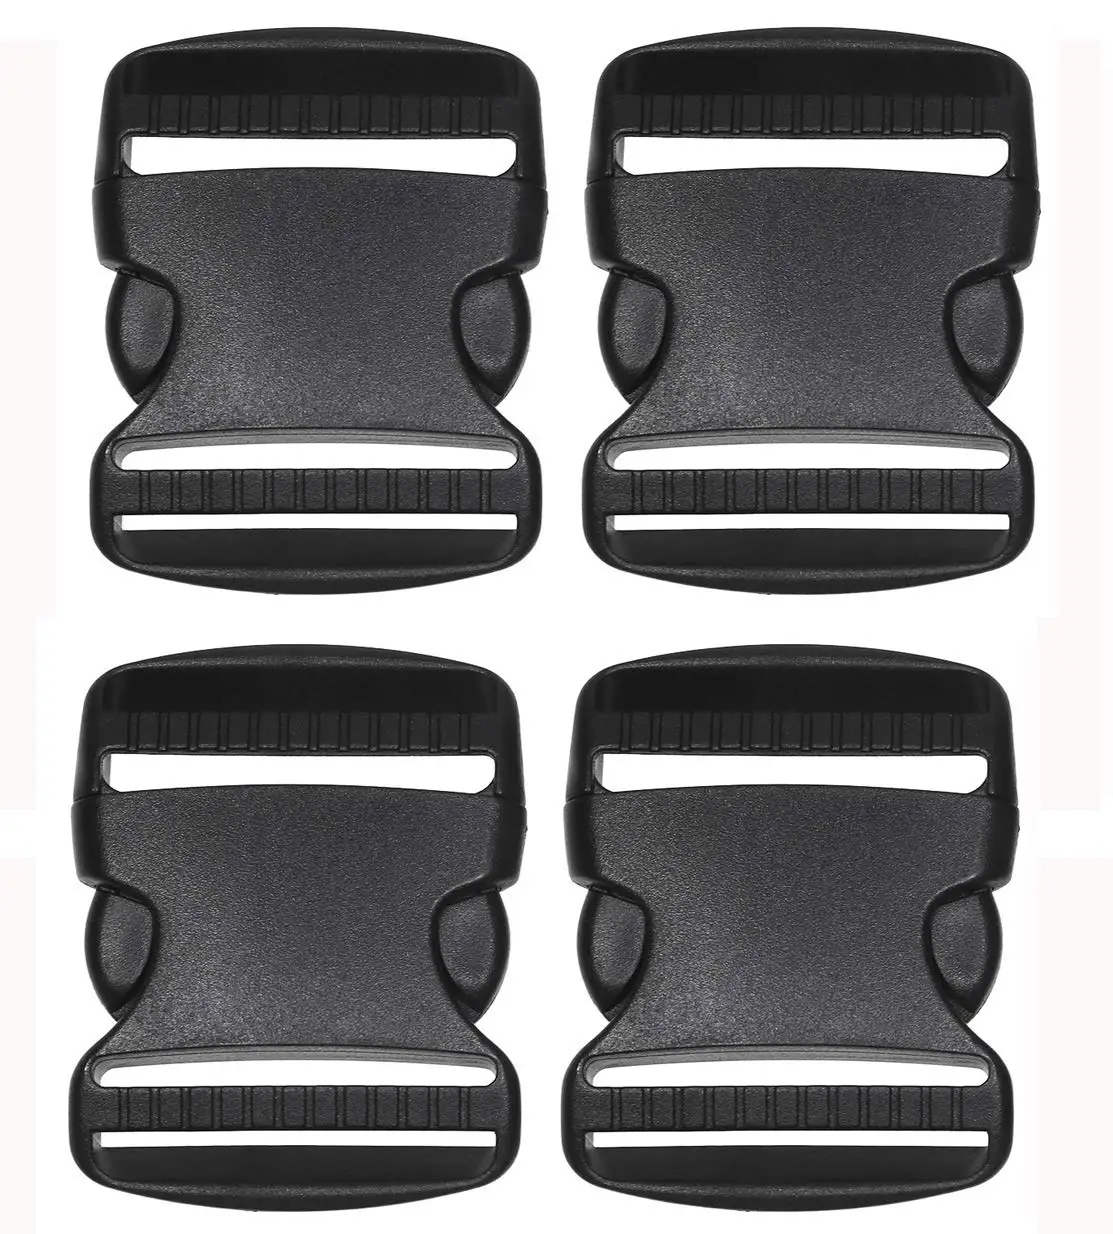 1 1-1//4,1-1//2 inch Buckle for Belt Strap Webbing Backpack 4//5 Side Release Buckles Clips Adjustable Plastic Buckles 5//8 5//8 inch, 10 PCS